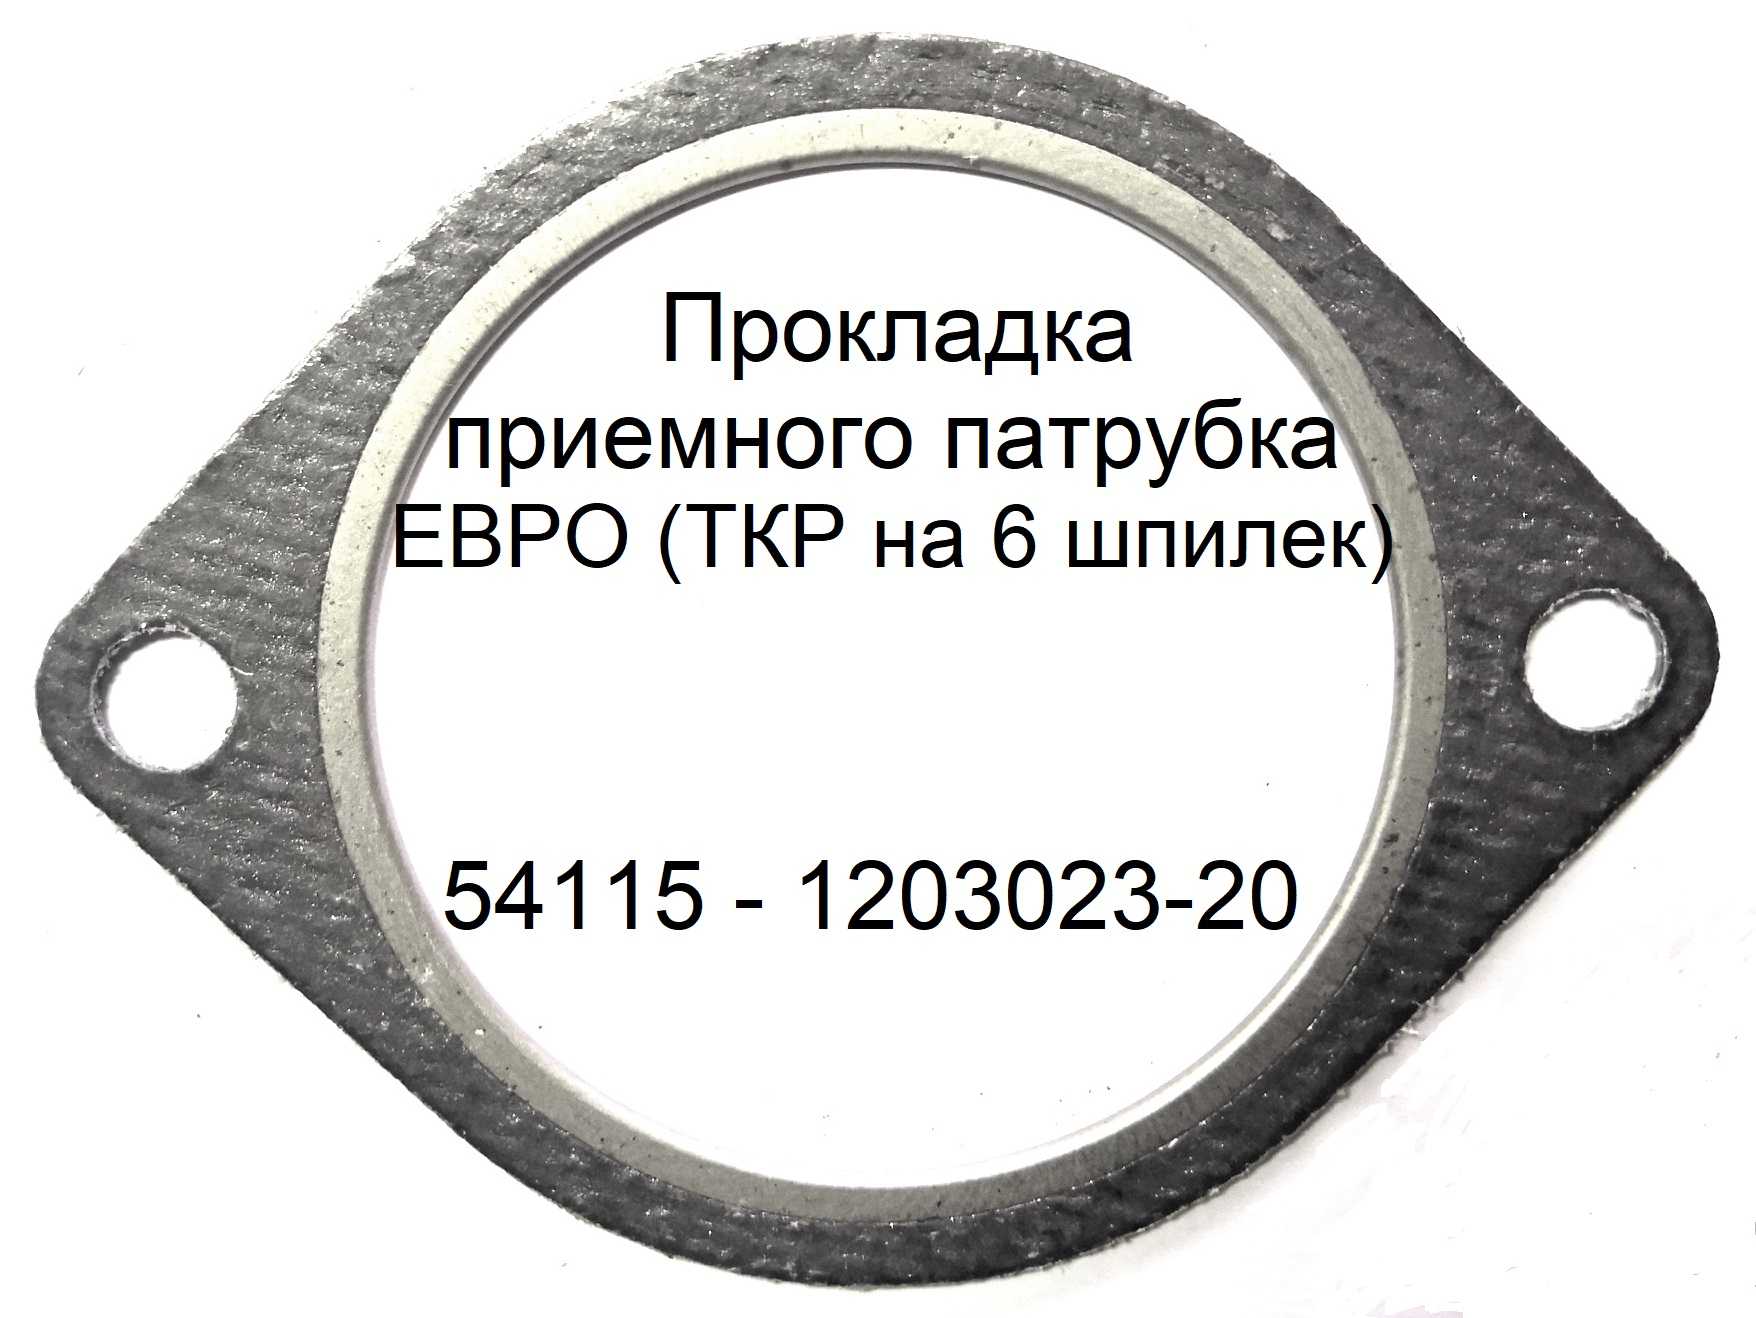 Прокладка приемного патрубка ЕВРО (ТКР на 6 шпилек)